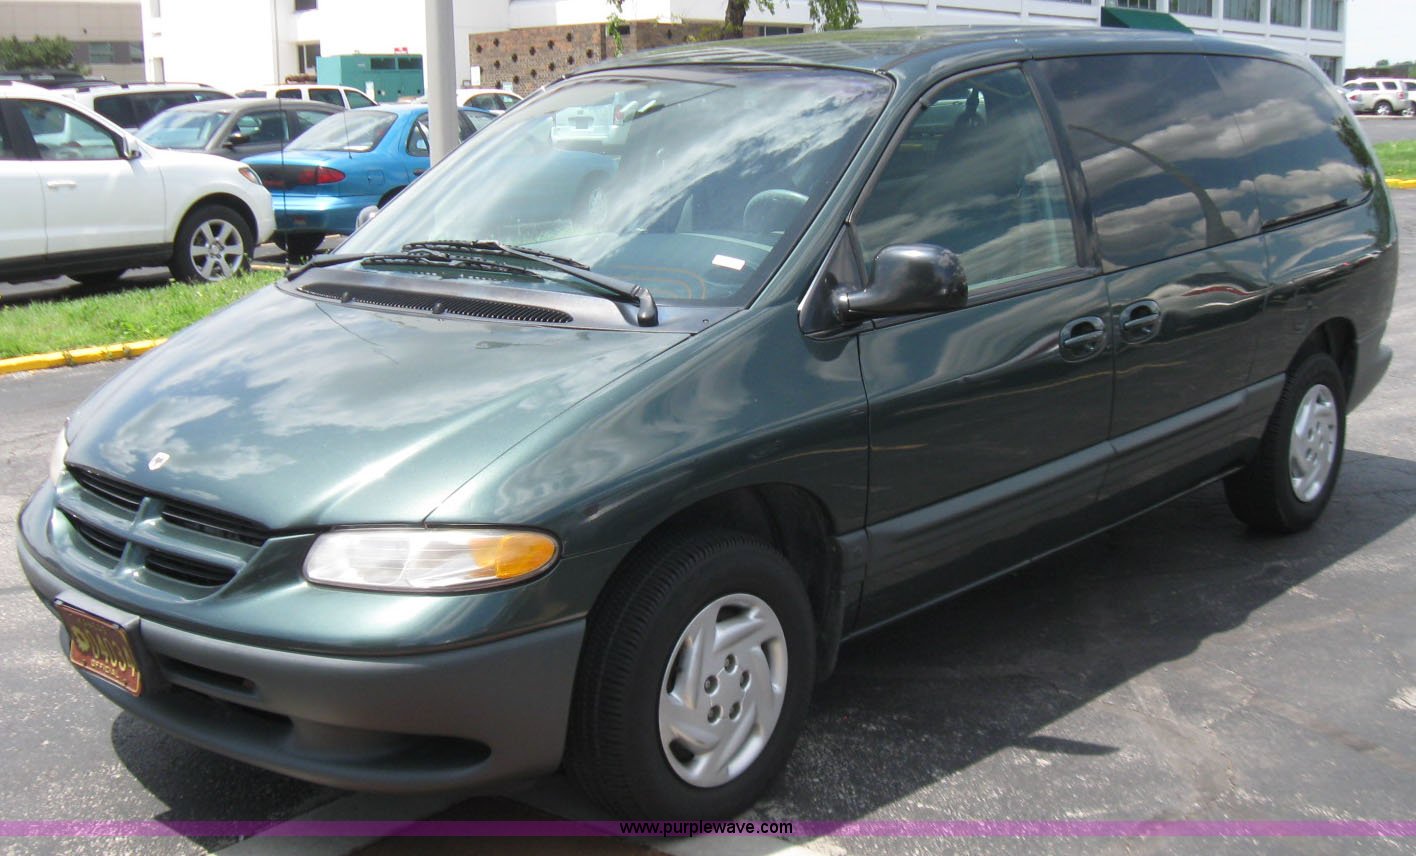 2000 Dodge Grand Caravan SE minivan in Kansas City , KS | Item 2244 sold |  Purple Wave